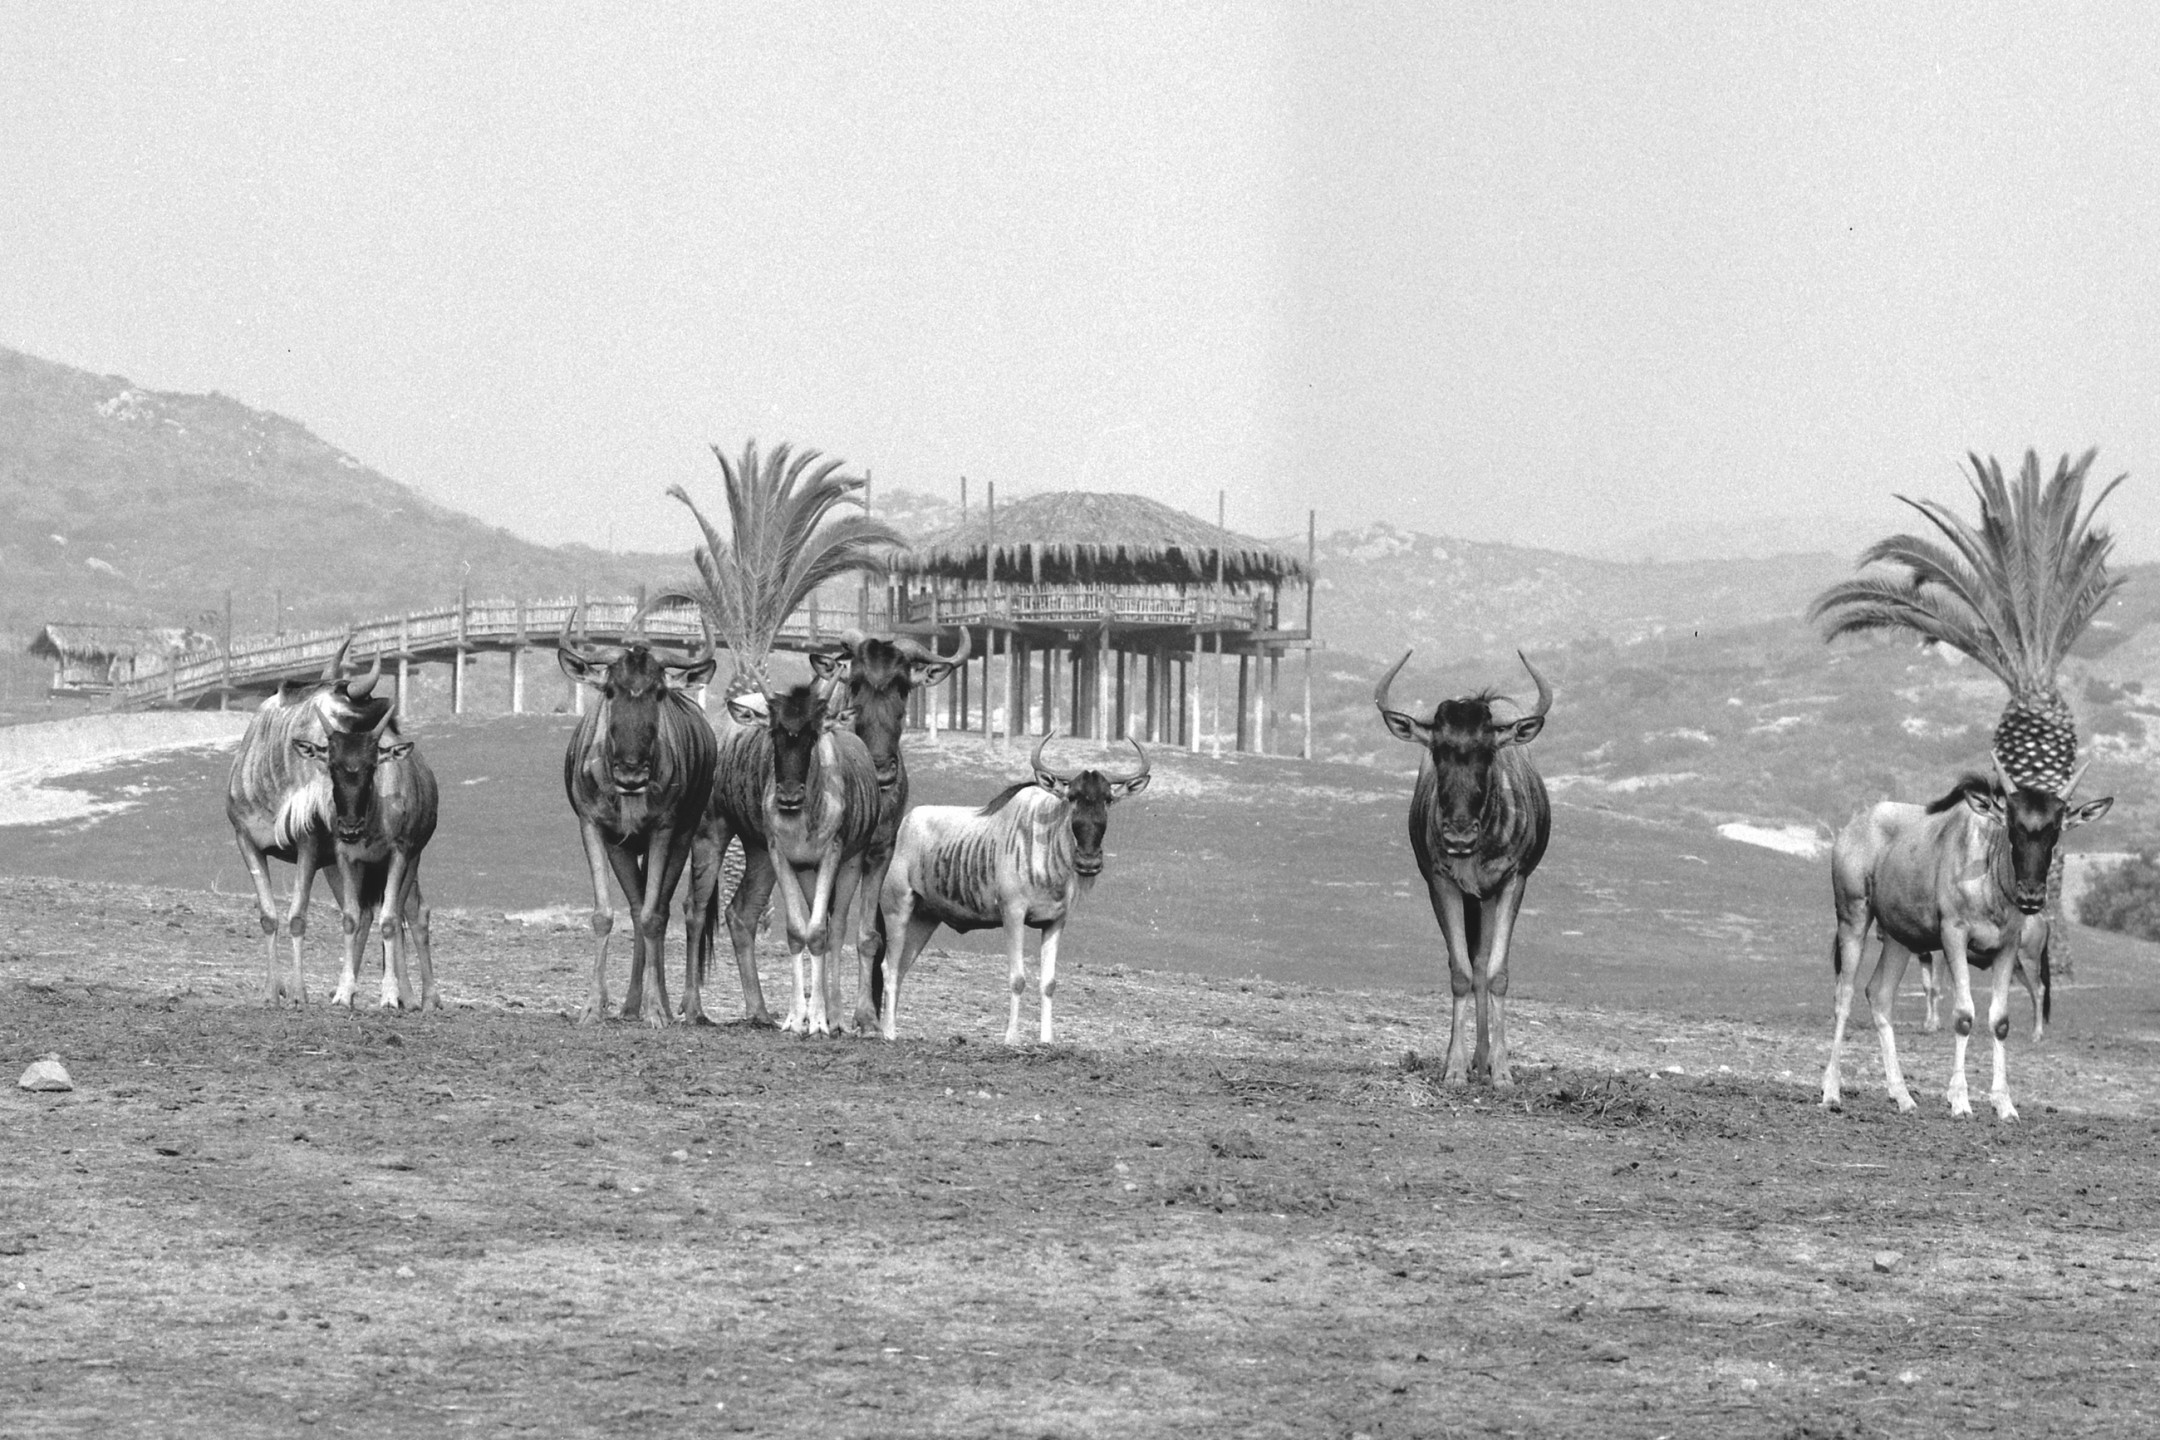 Wildebeest, with Pumzika Point observation platform in the background